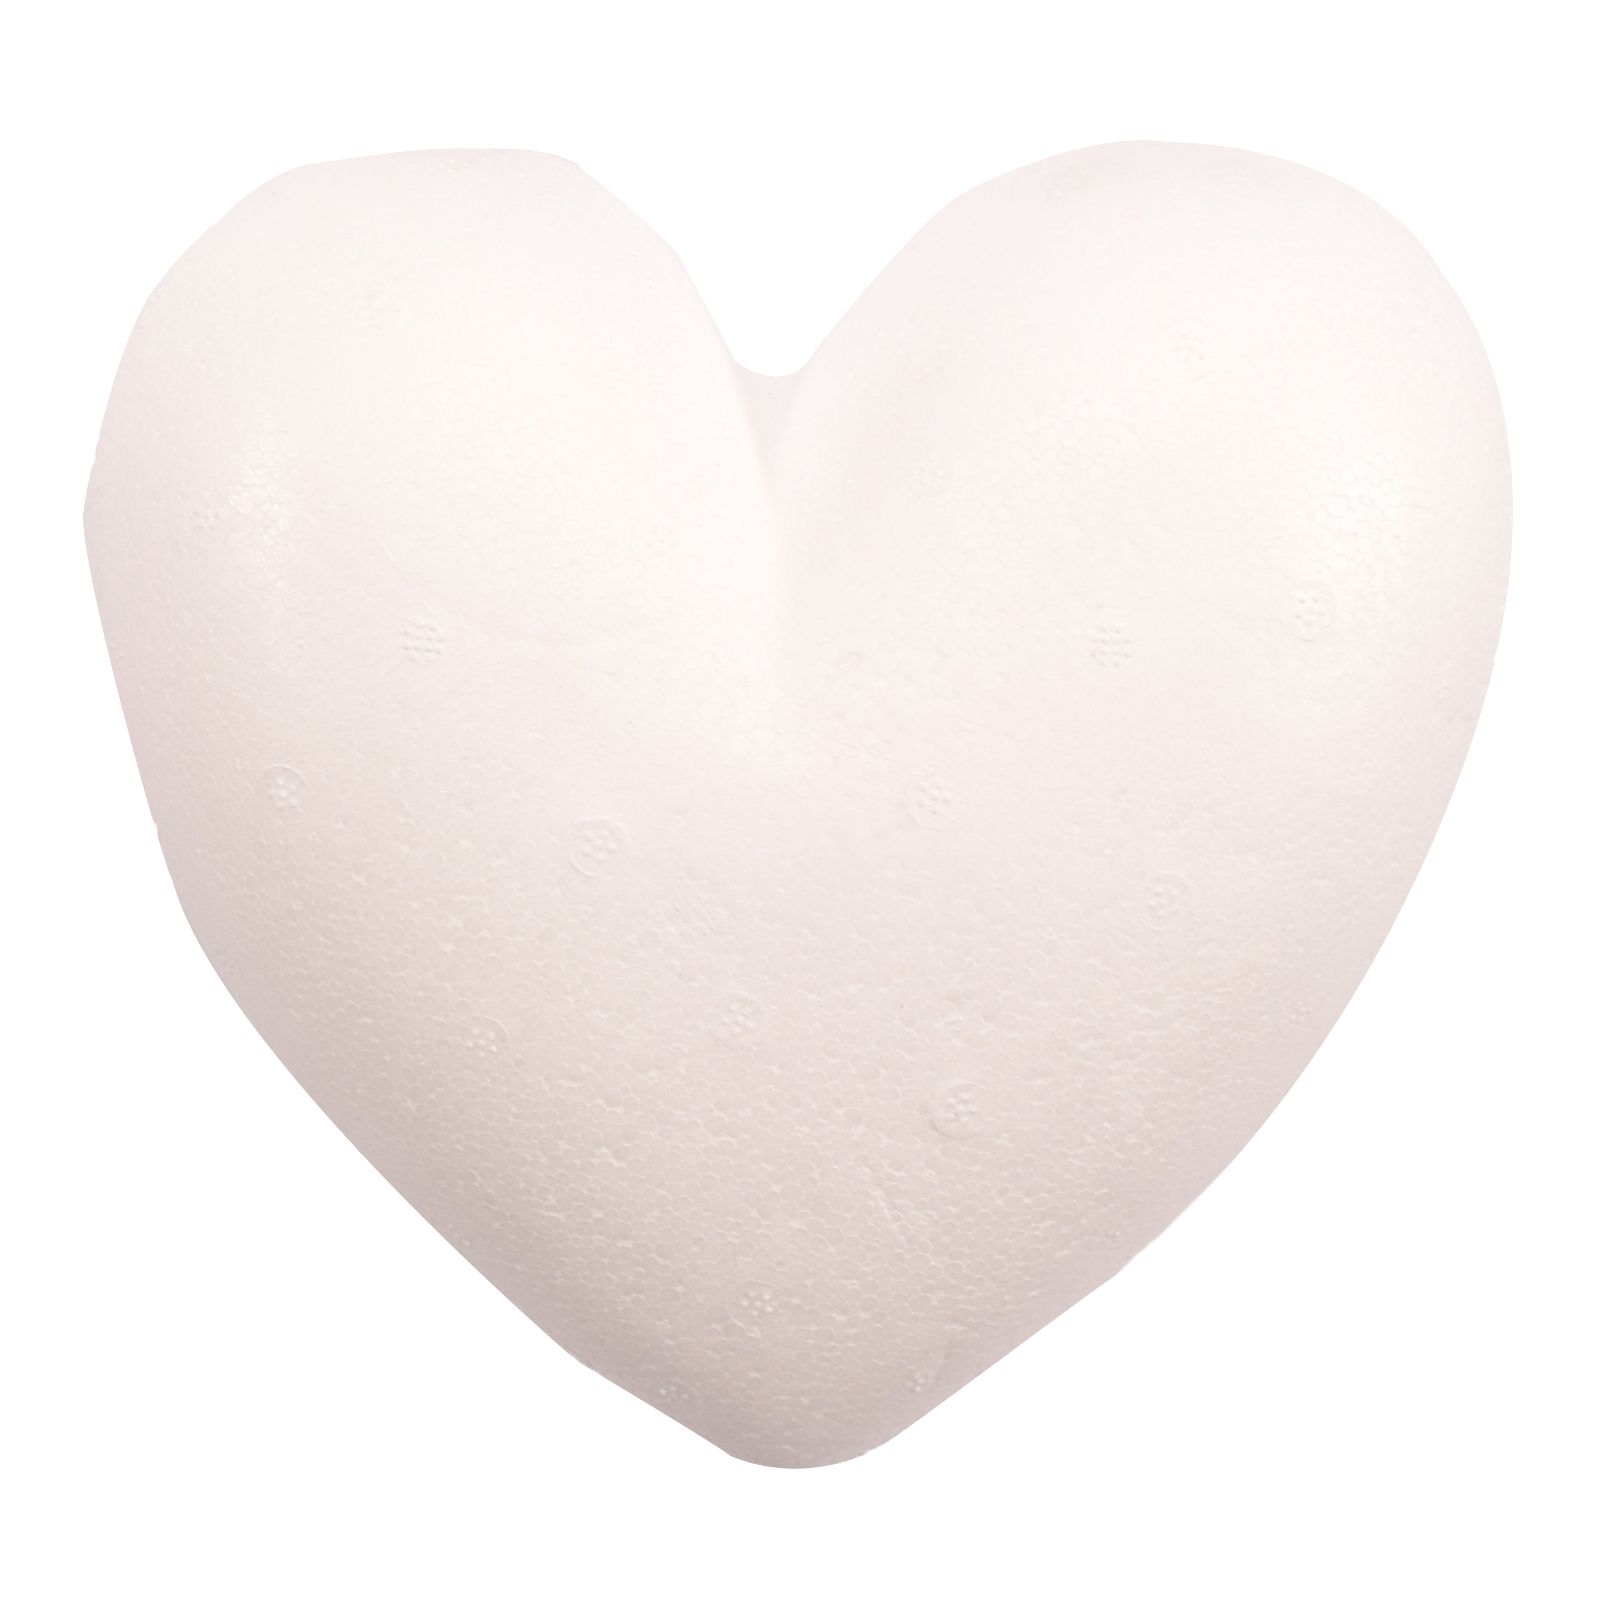 Vaessen Creative • Styrofoam heart flat back 15cm